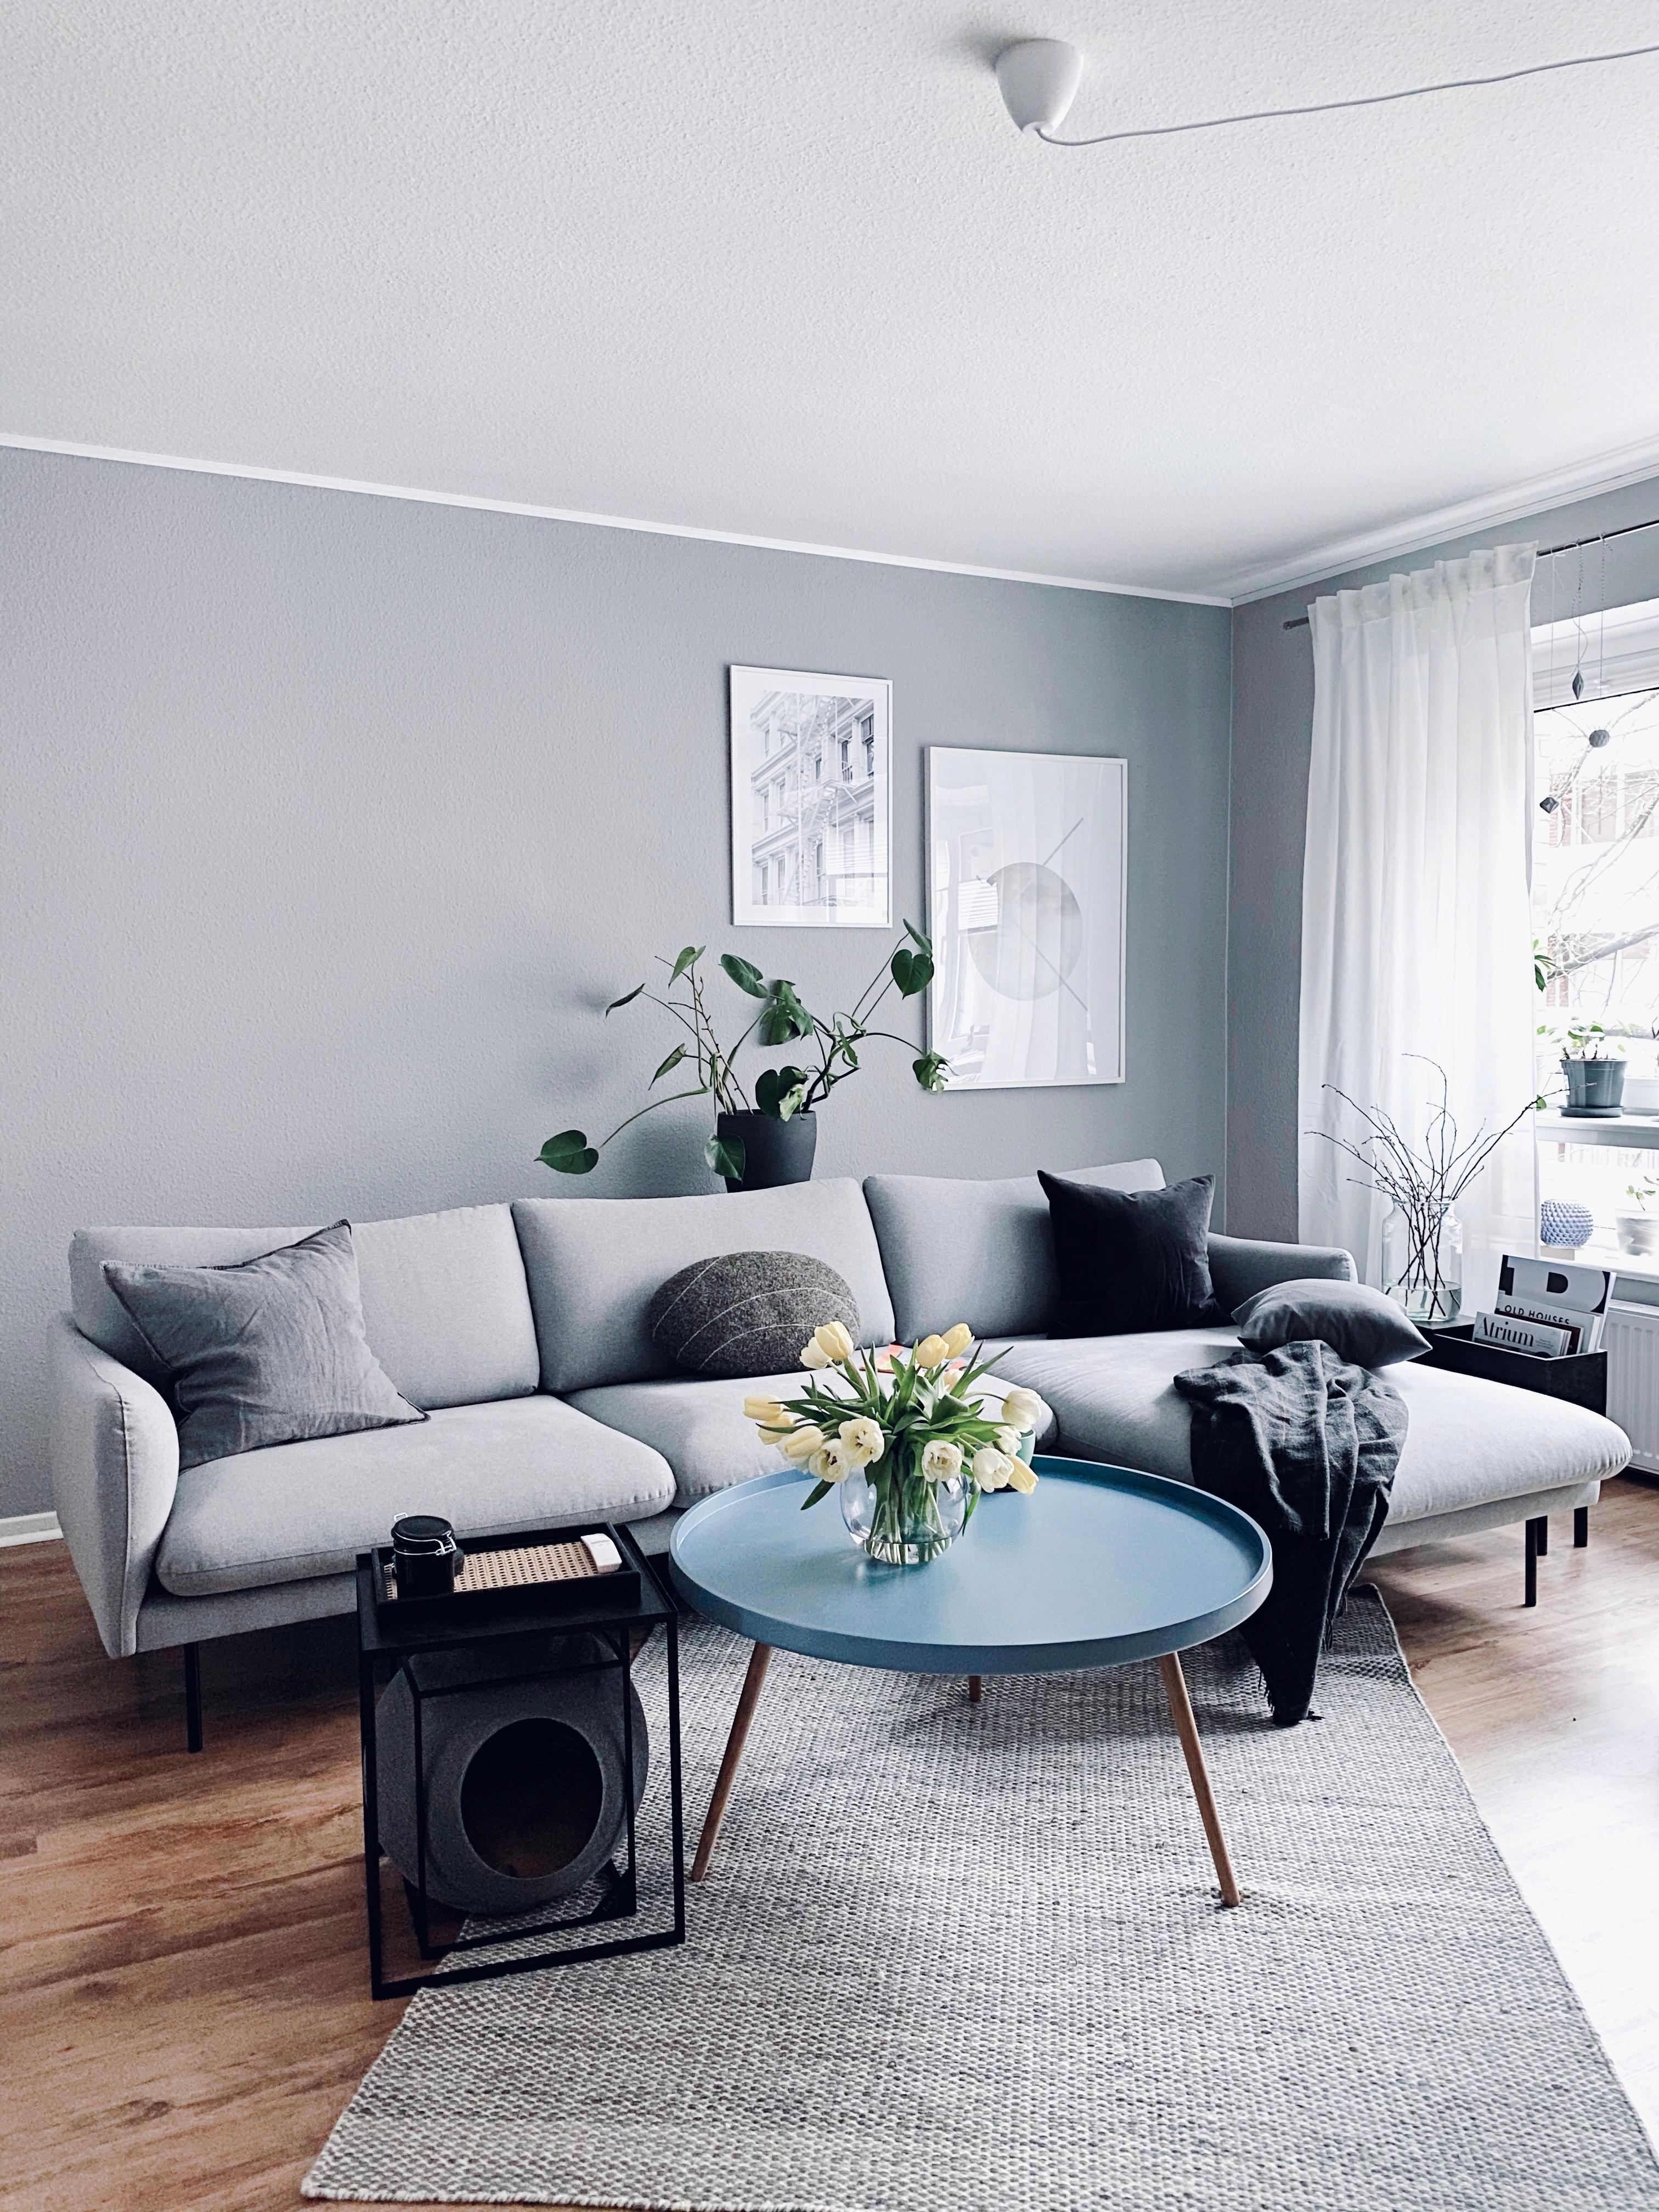 #livingroom #mynordicroom #pflanzenliebe #interior #minimalism #scandinavianliving